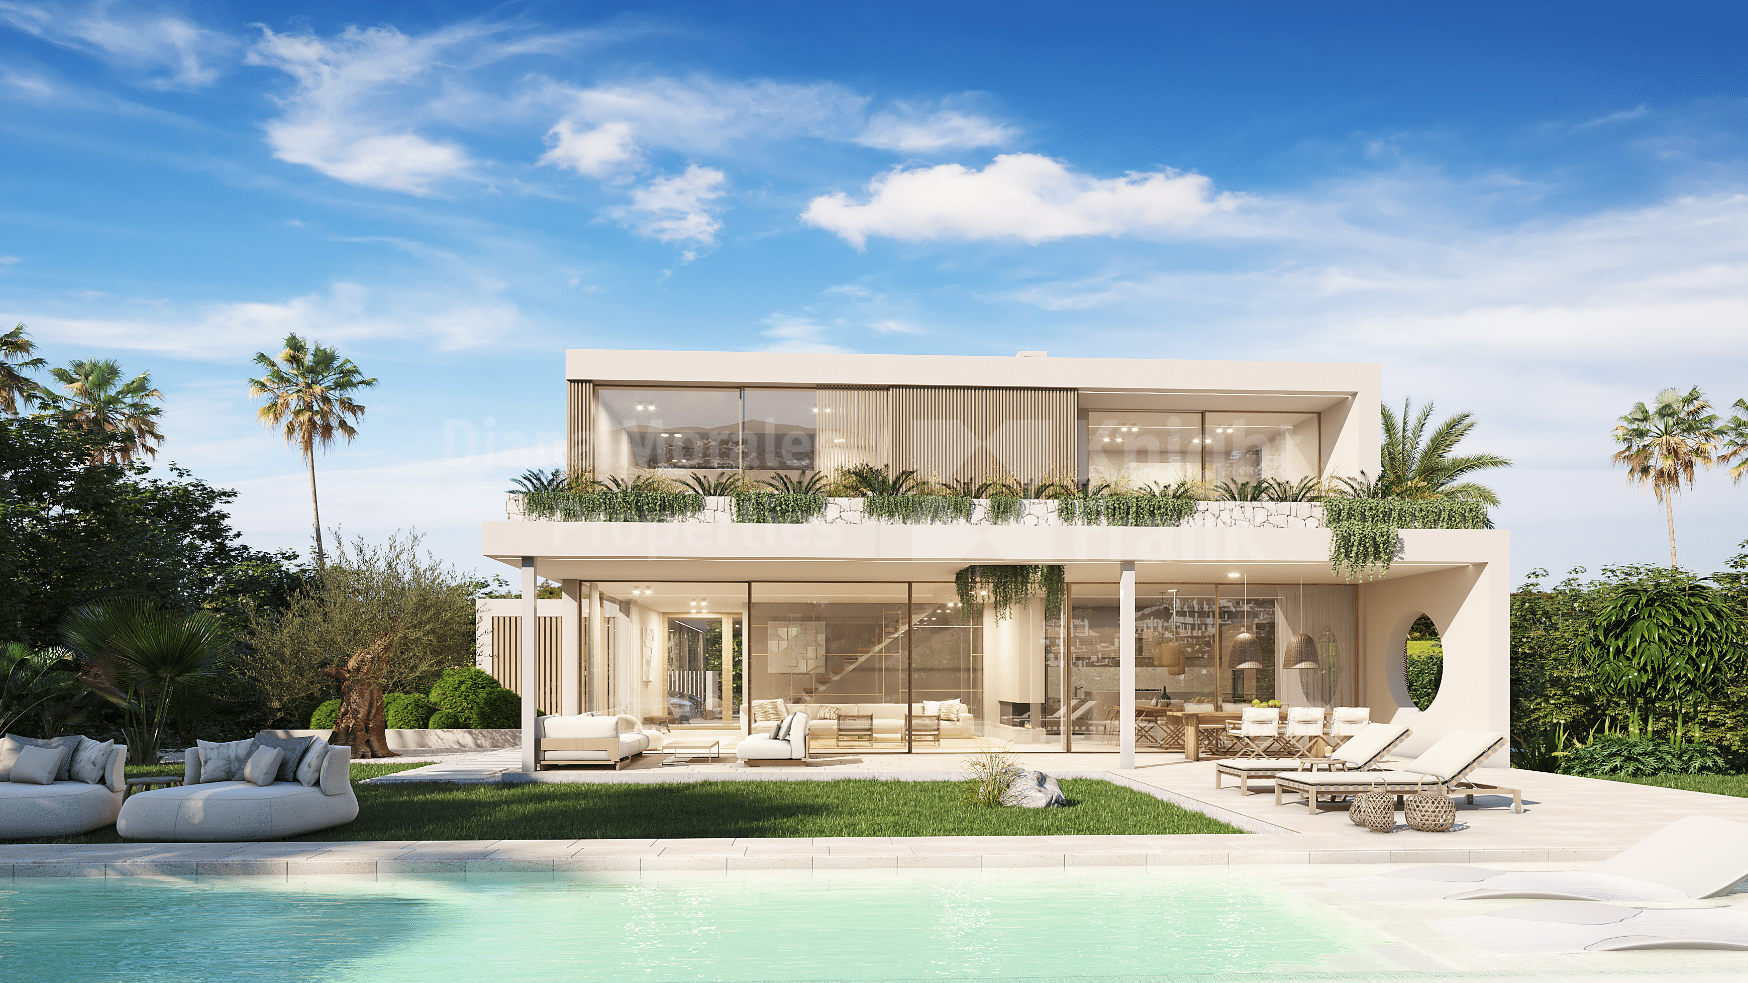 La Alqueria, Casa Calma, new villa close to golf courses in residential urbanisation